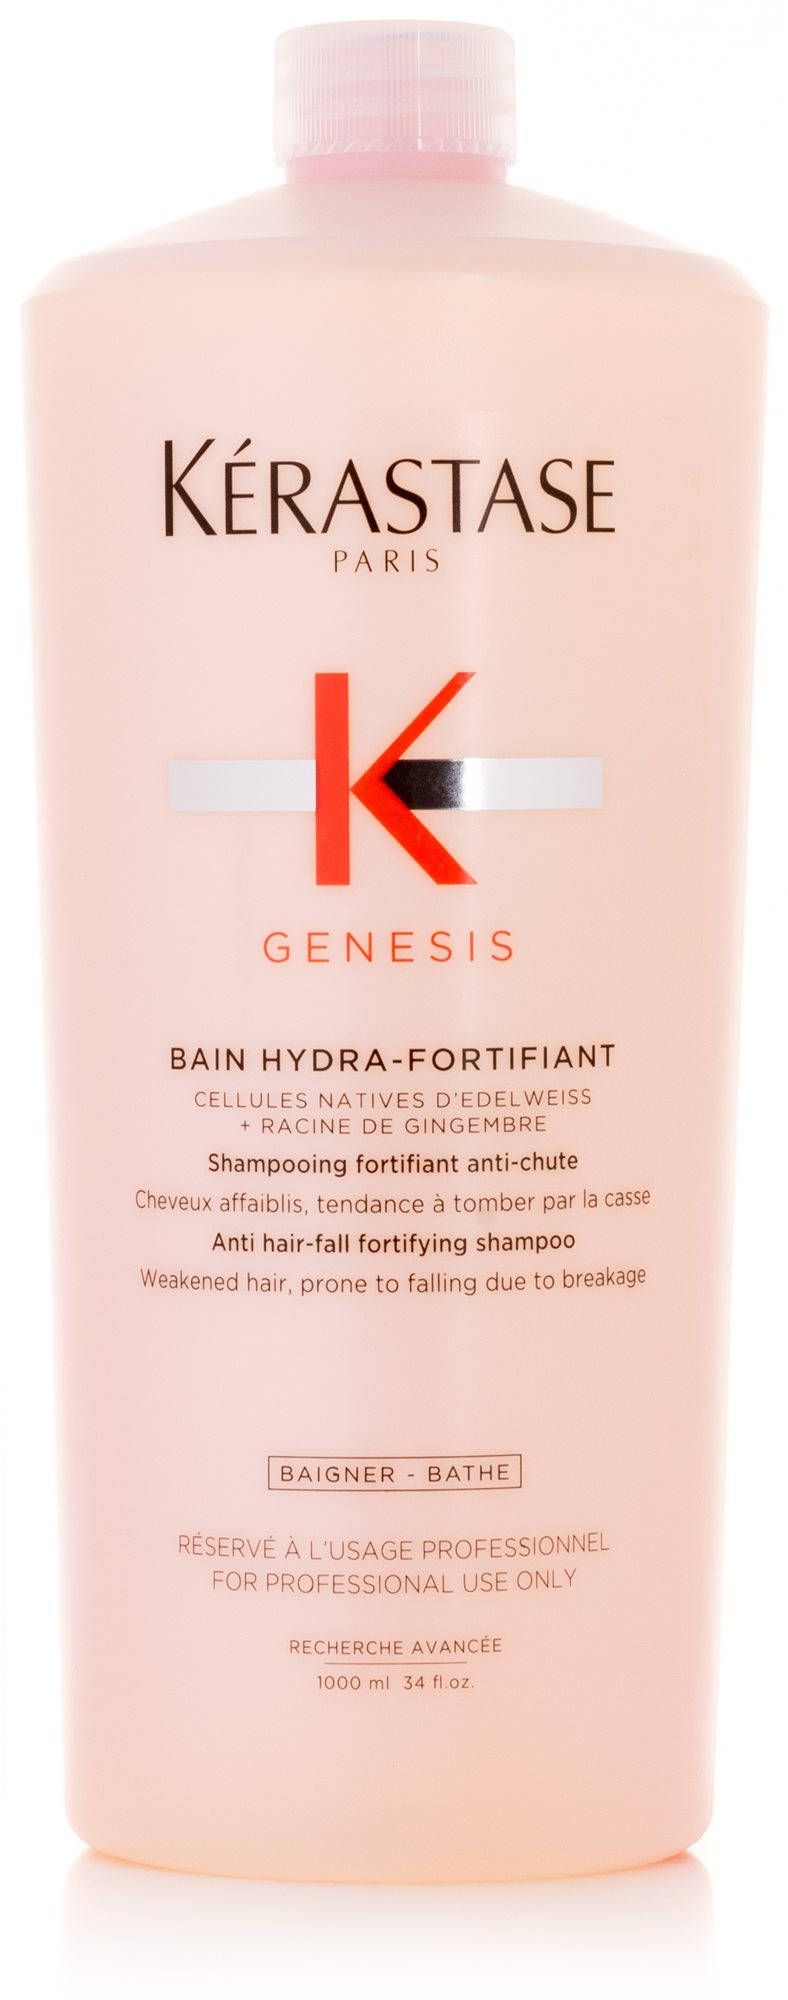 KÉRASTASE Genesis Bain Hydra Fortifiant Shampoo 1000 ml